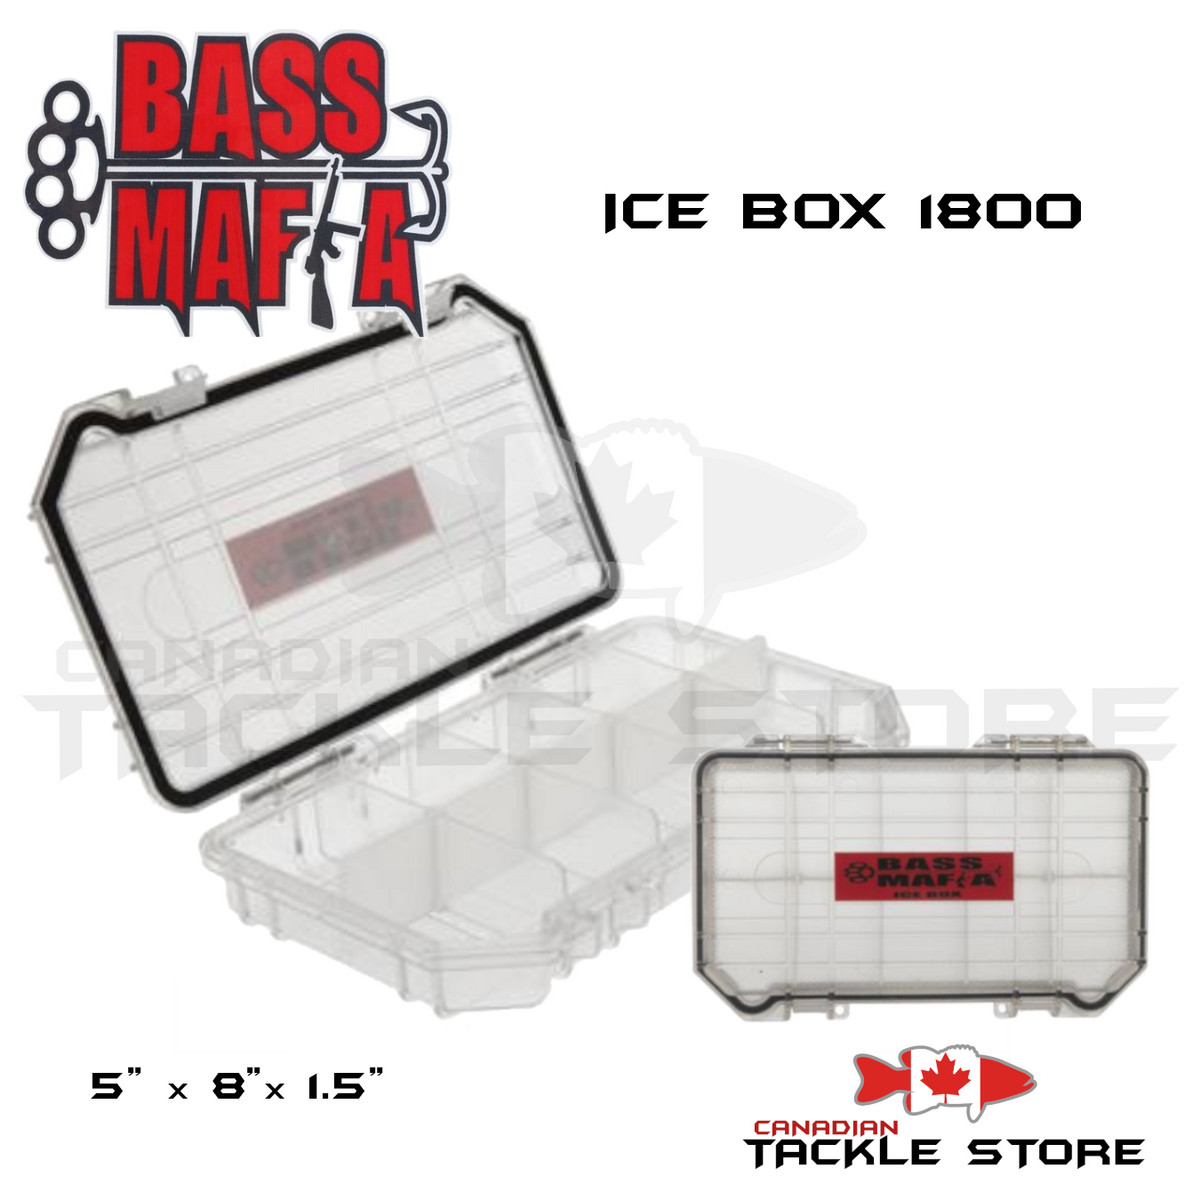 Bass Mafia Ice Box Seriers – Canadian Tackle Store